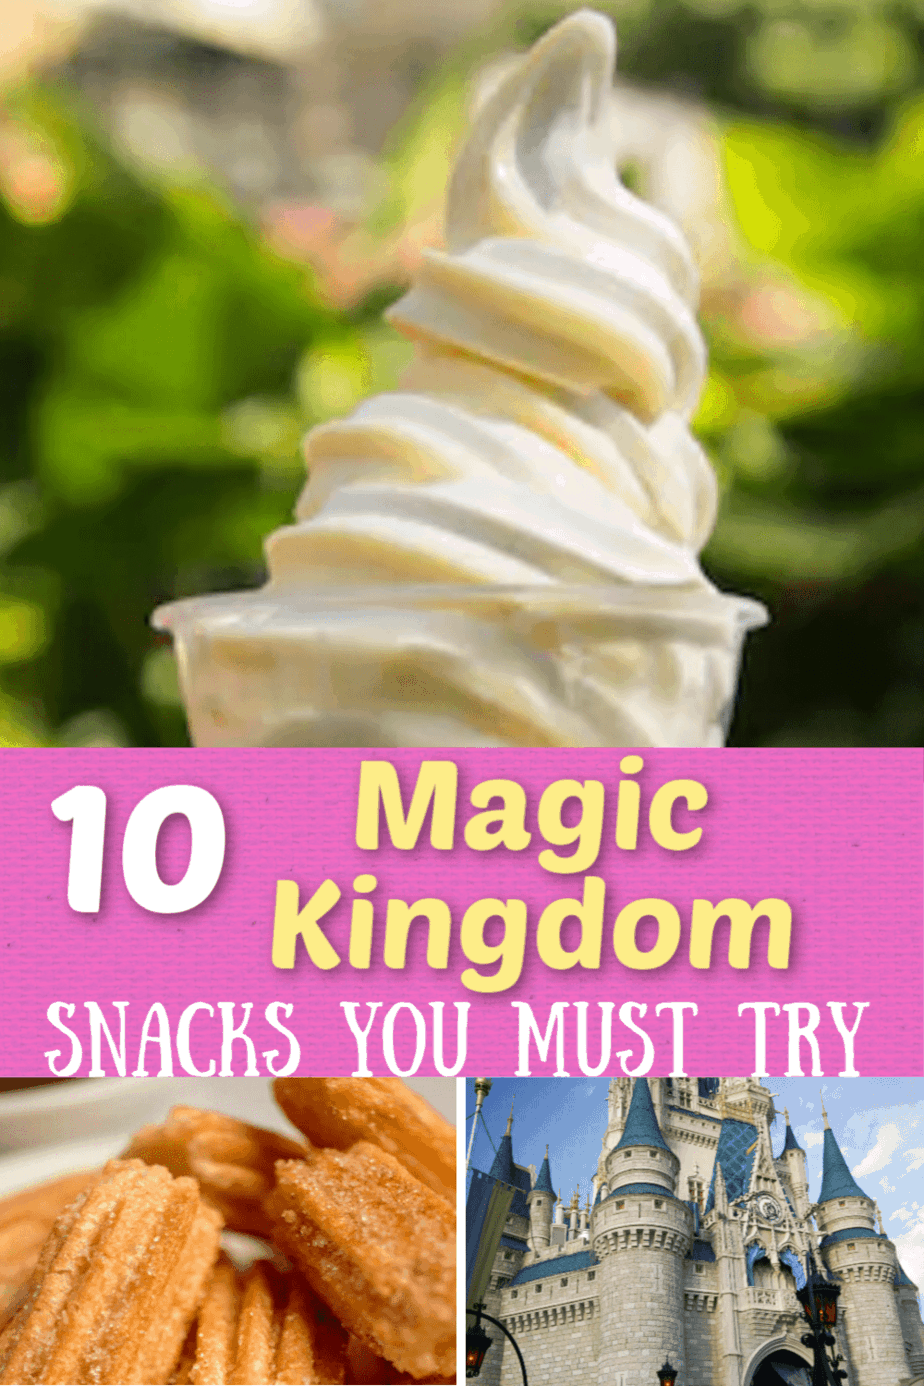 Magic Kingdom snacks